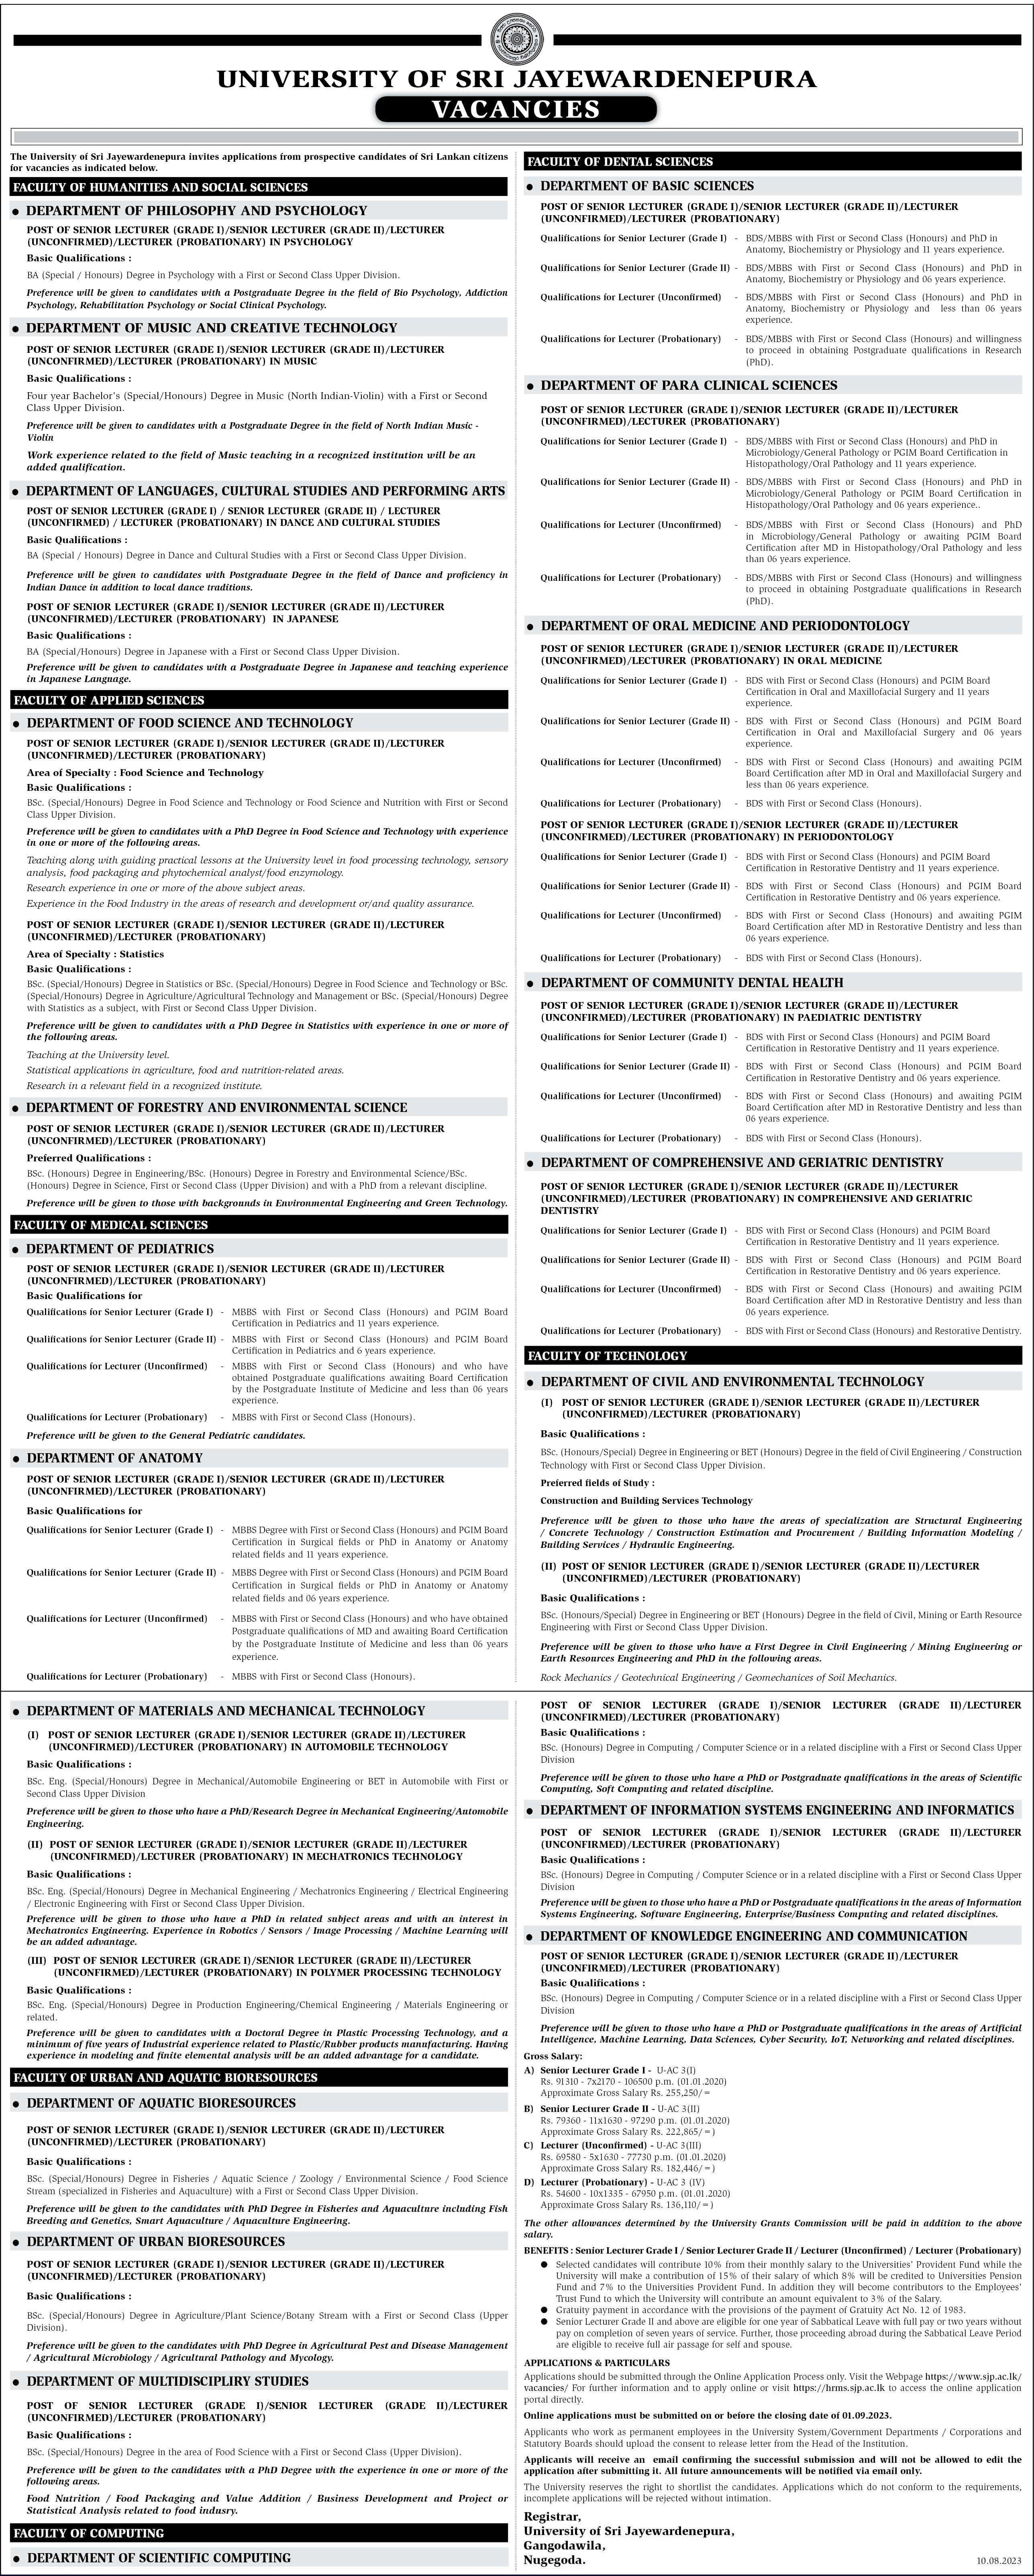 University of Sri Jayewardenepura Job Vacancies 2023 Application Form, Details Download